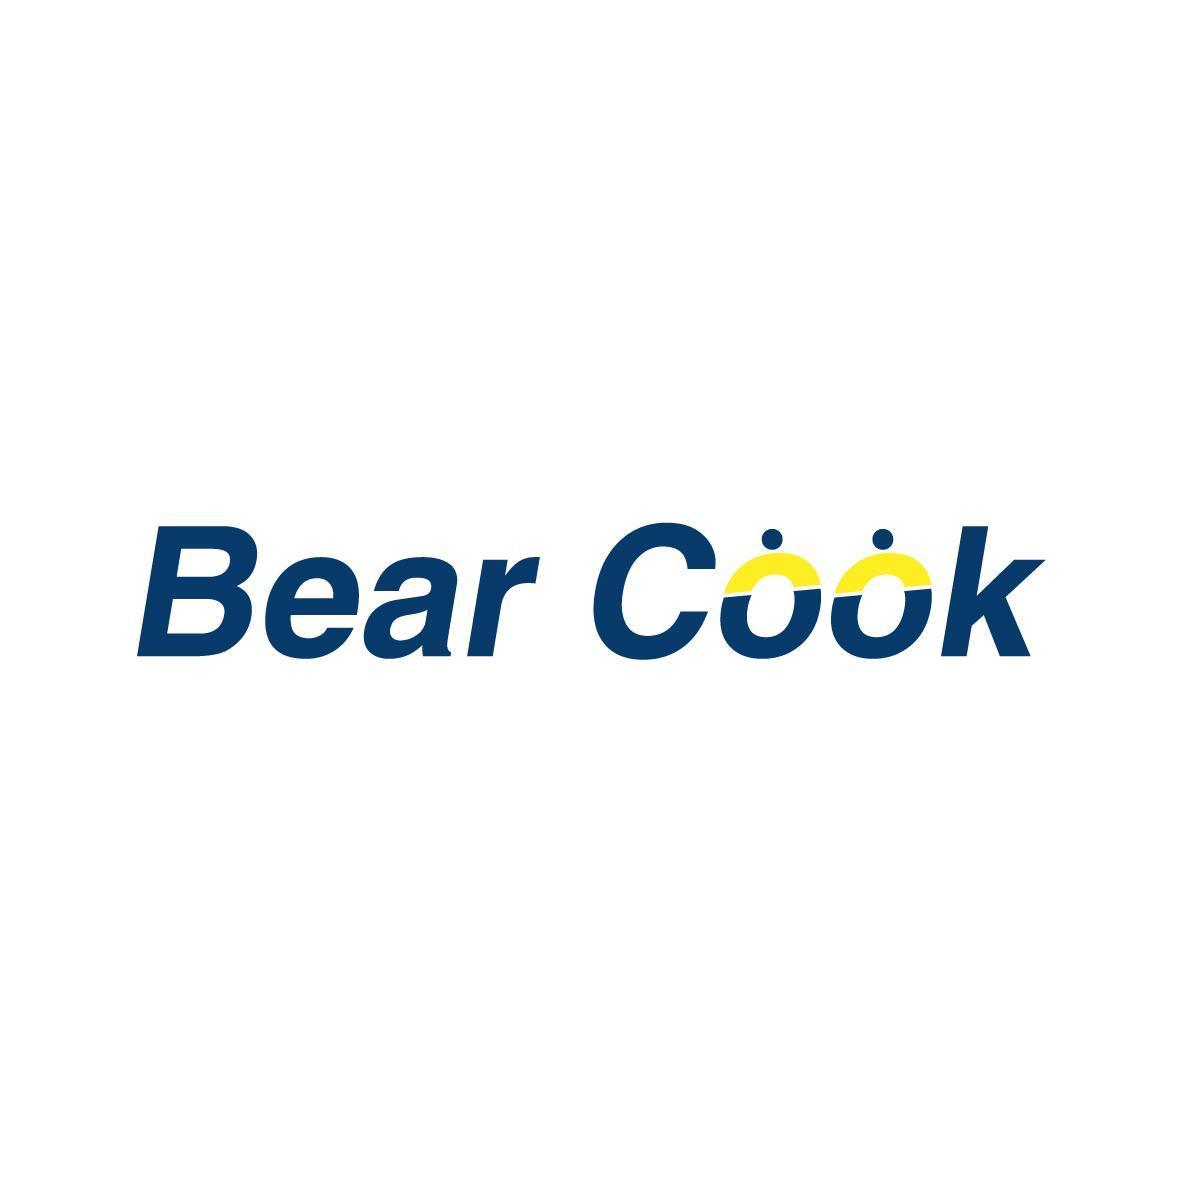 Bear Cook